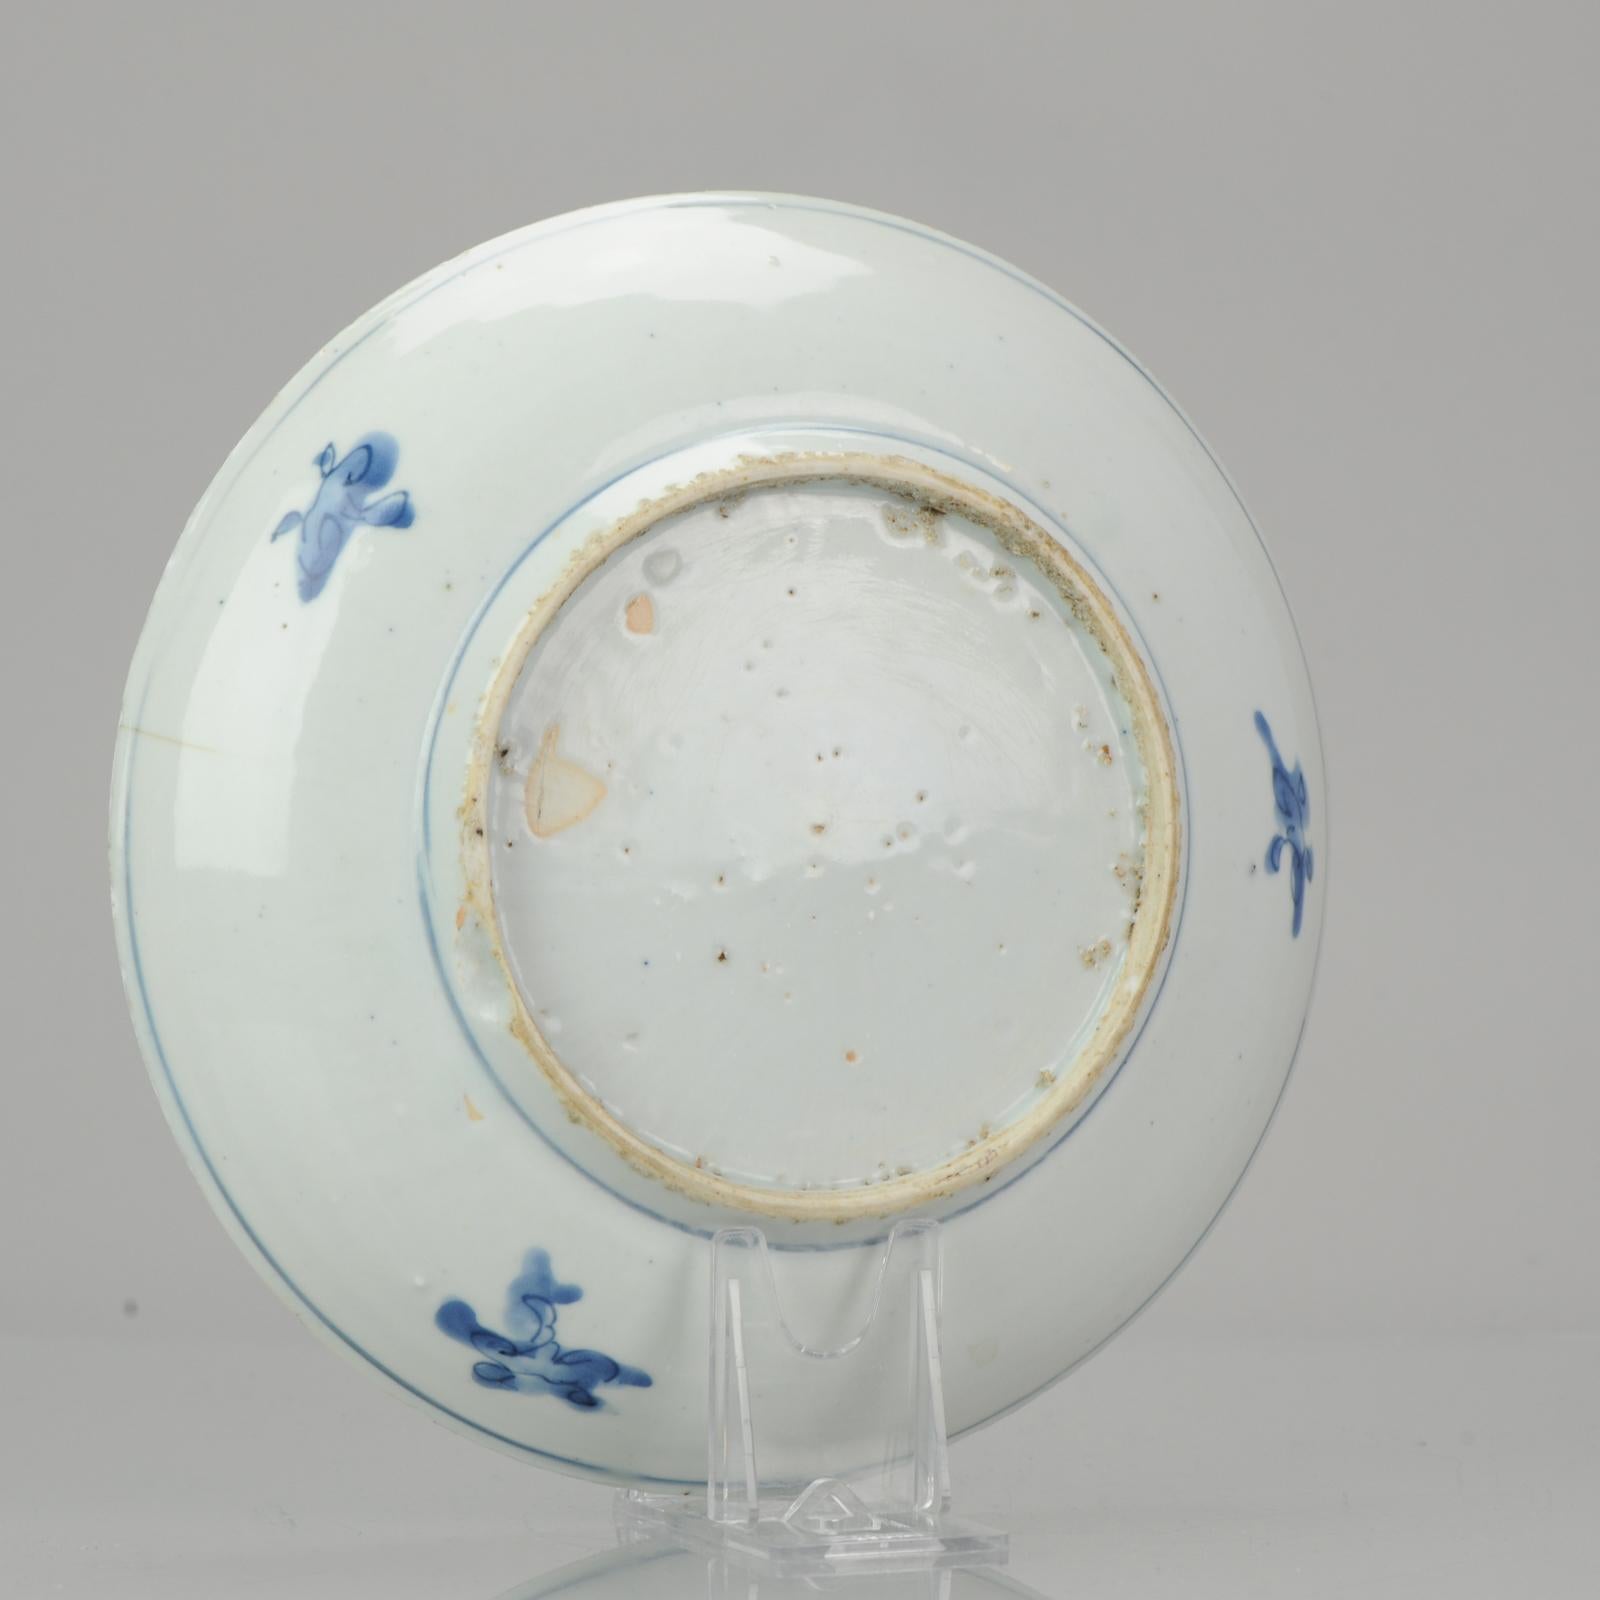 Antique Chinese Porcelain Lotus Ming 1600-1640 Tianqi Chongzhen Anhua Engraving For Sale 3